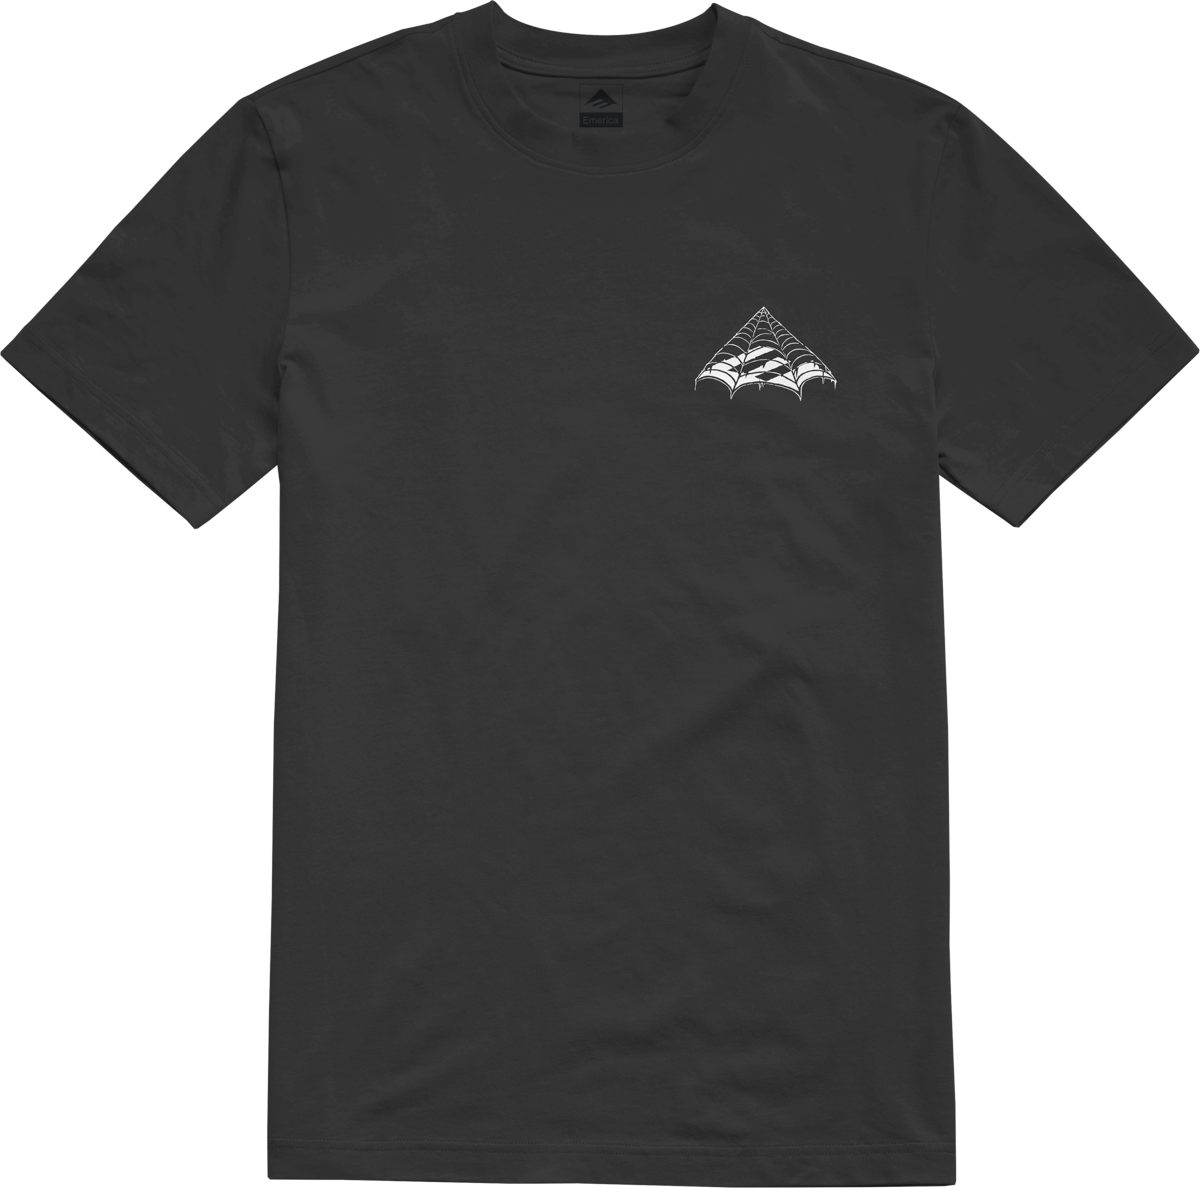 Emerica Mens Creature Triangle Web Tee Black T-Shirt